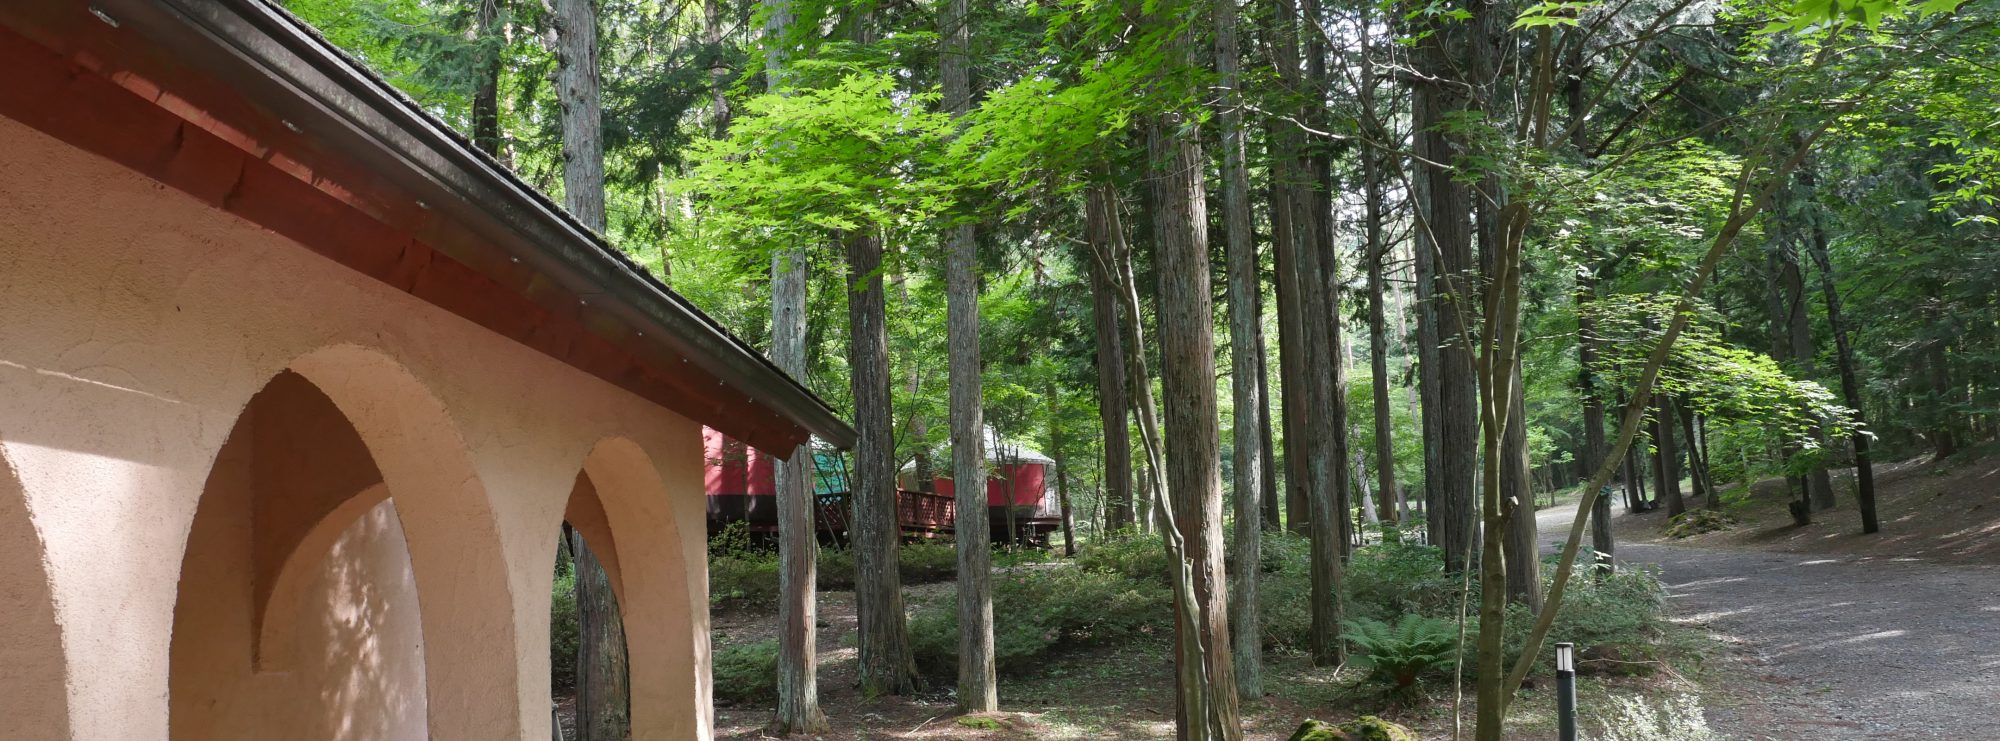 fuji-manganvillage family camp ground